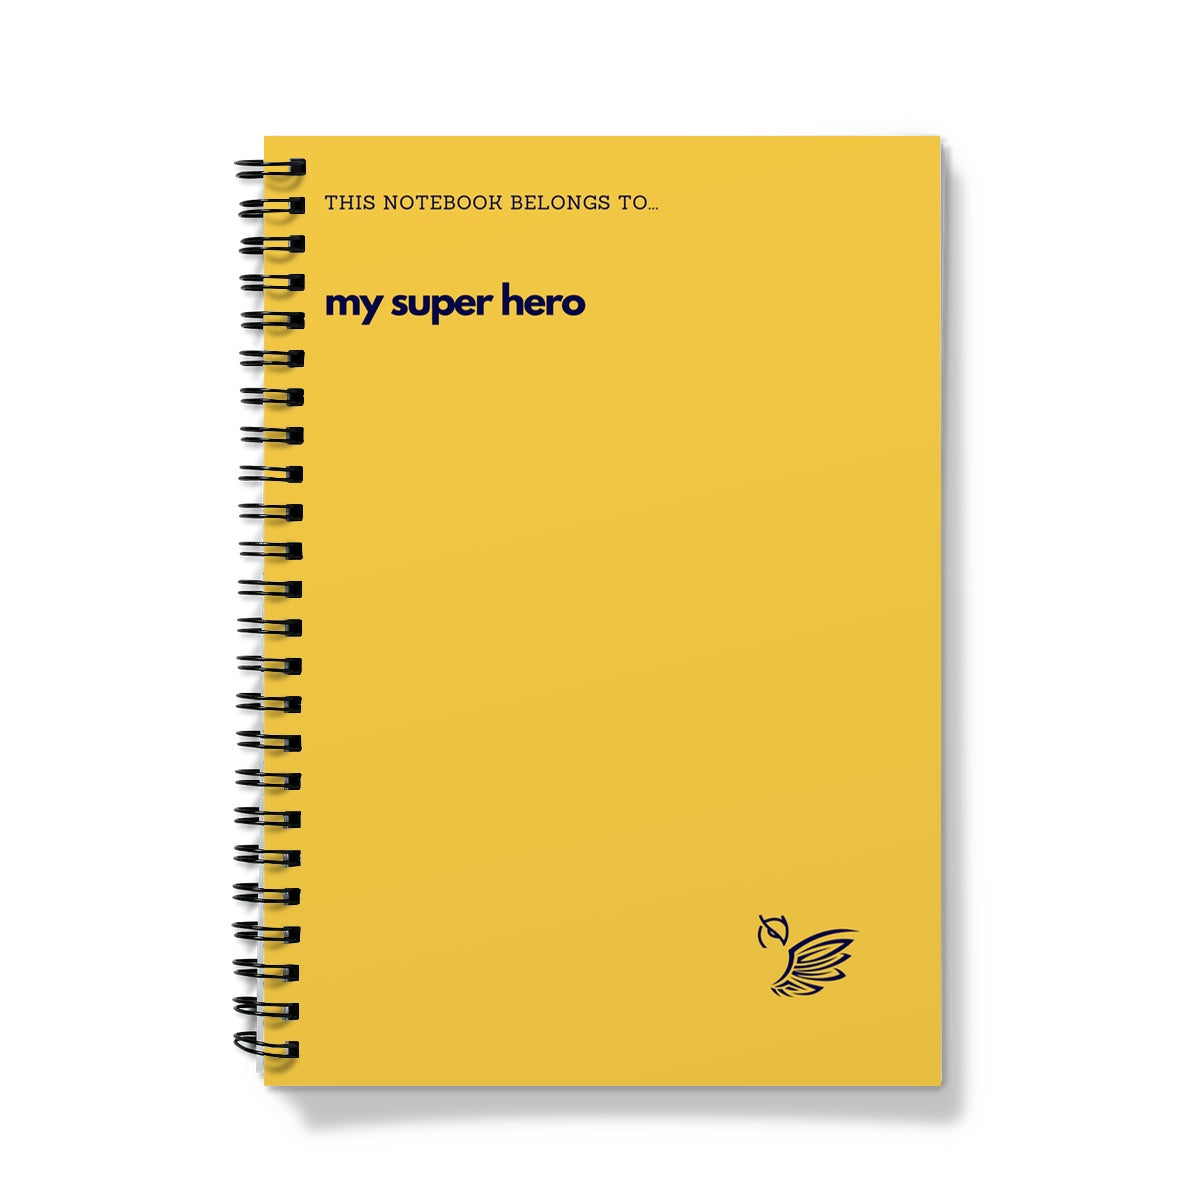 This Notebook Belongs To... My Super Hero - Yellow Notebook